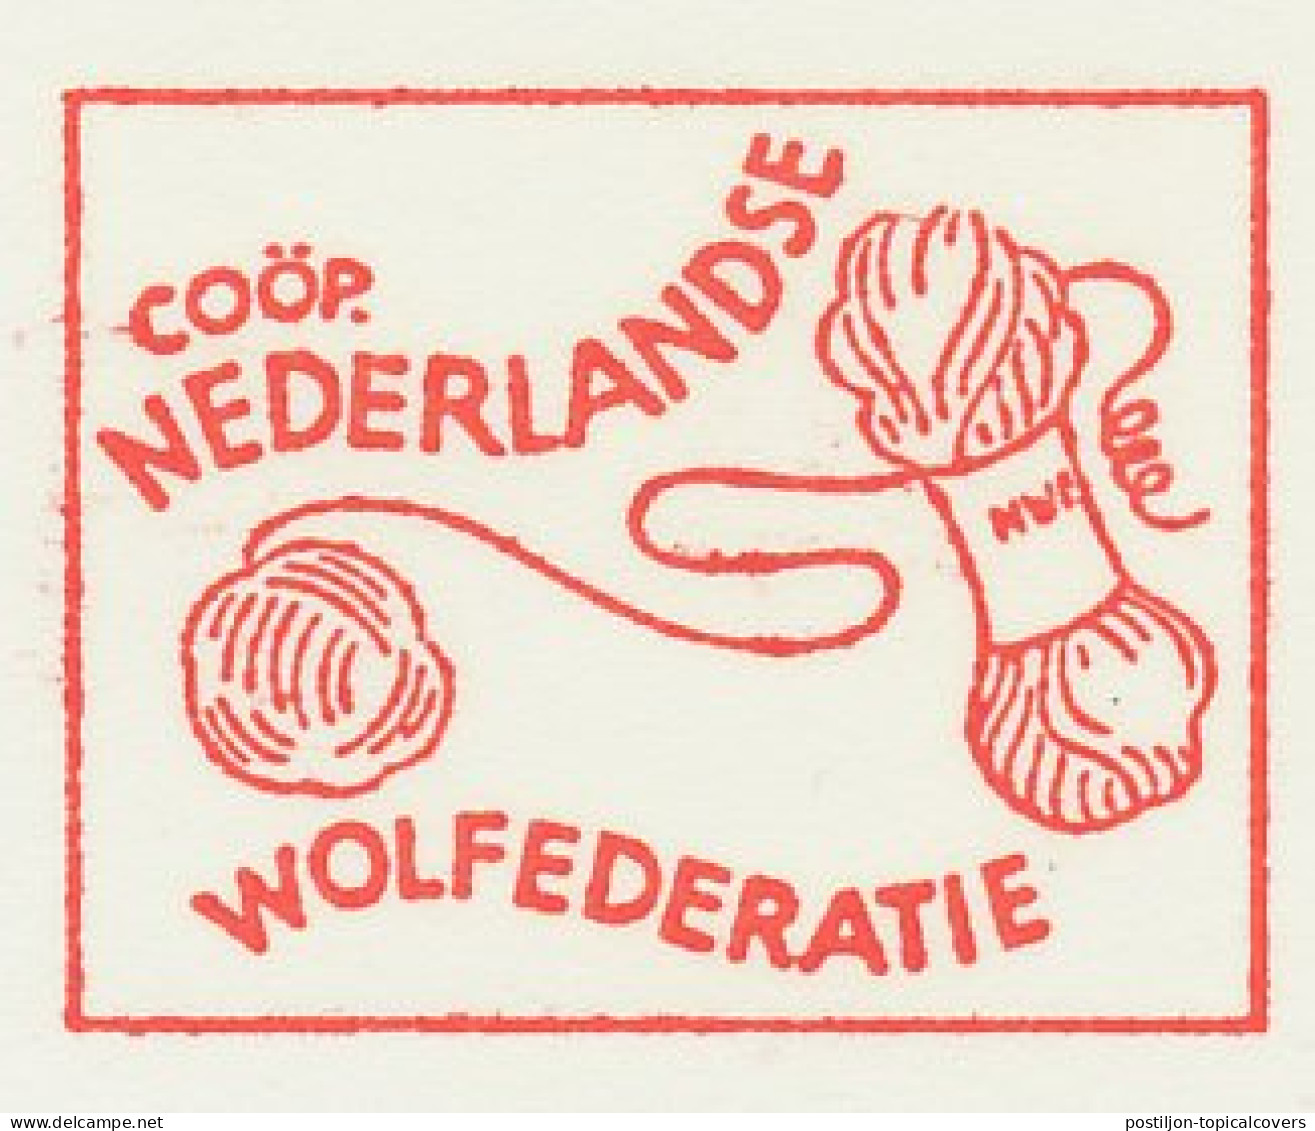 Proof / Test Meter Strip Netherlands 1968 Wool Federation - Textiles